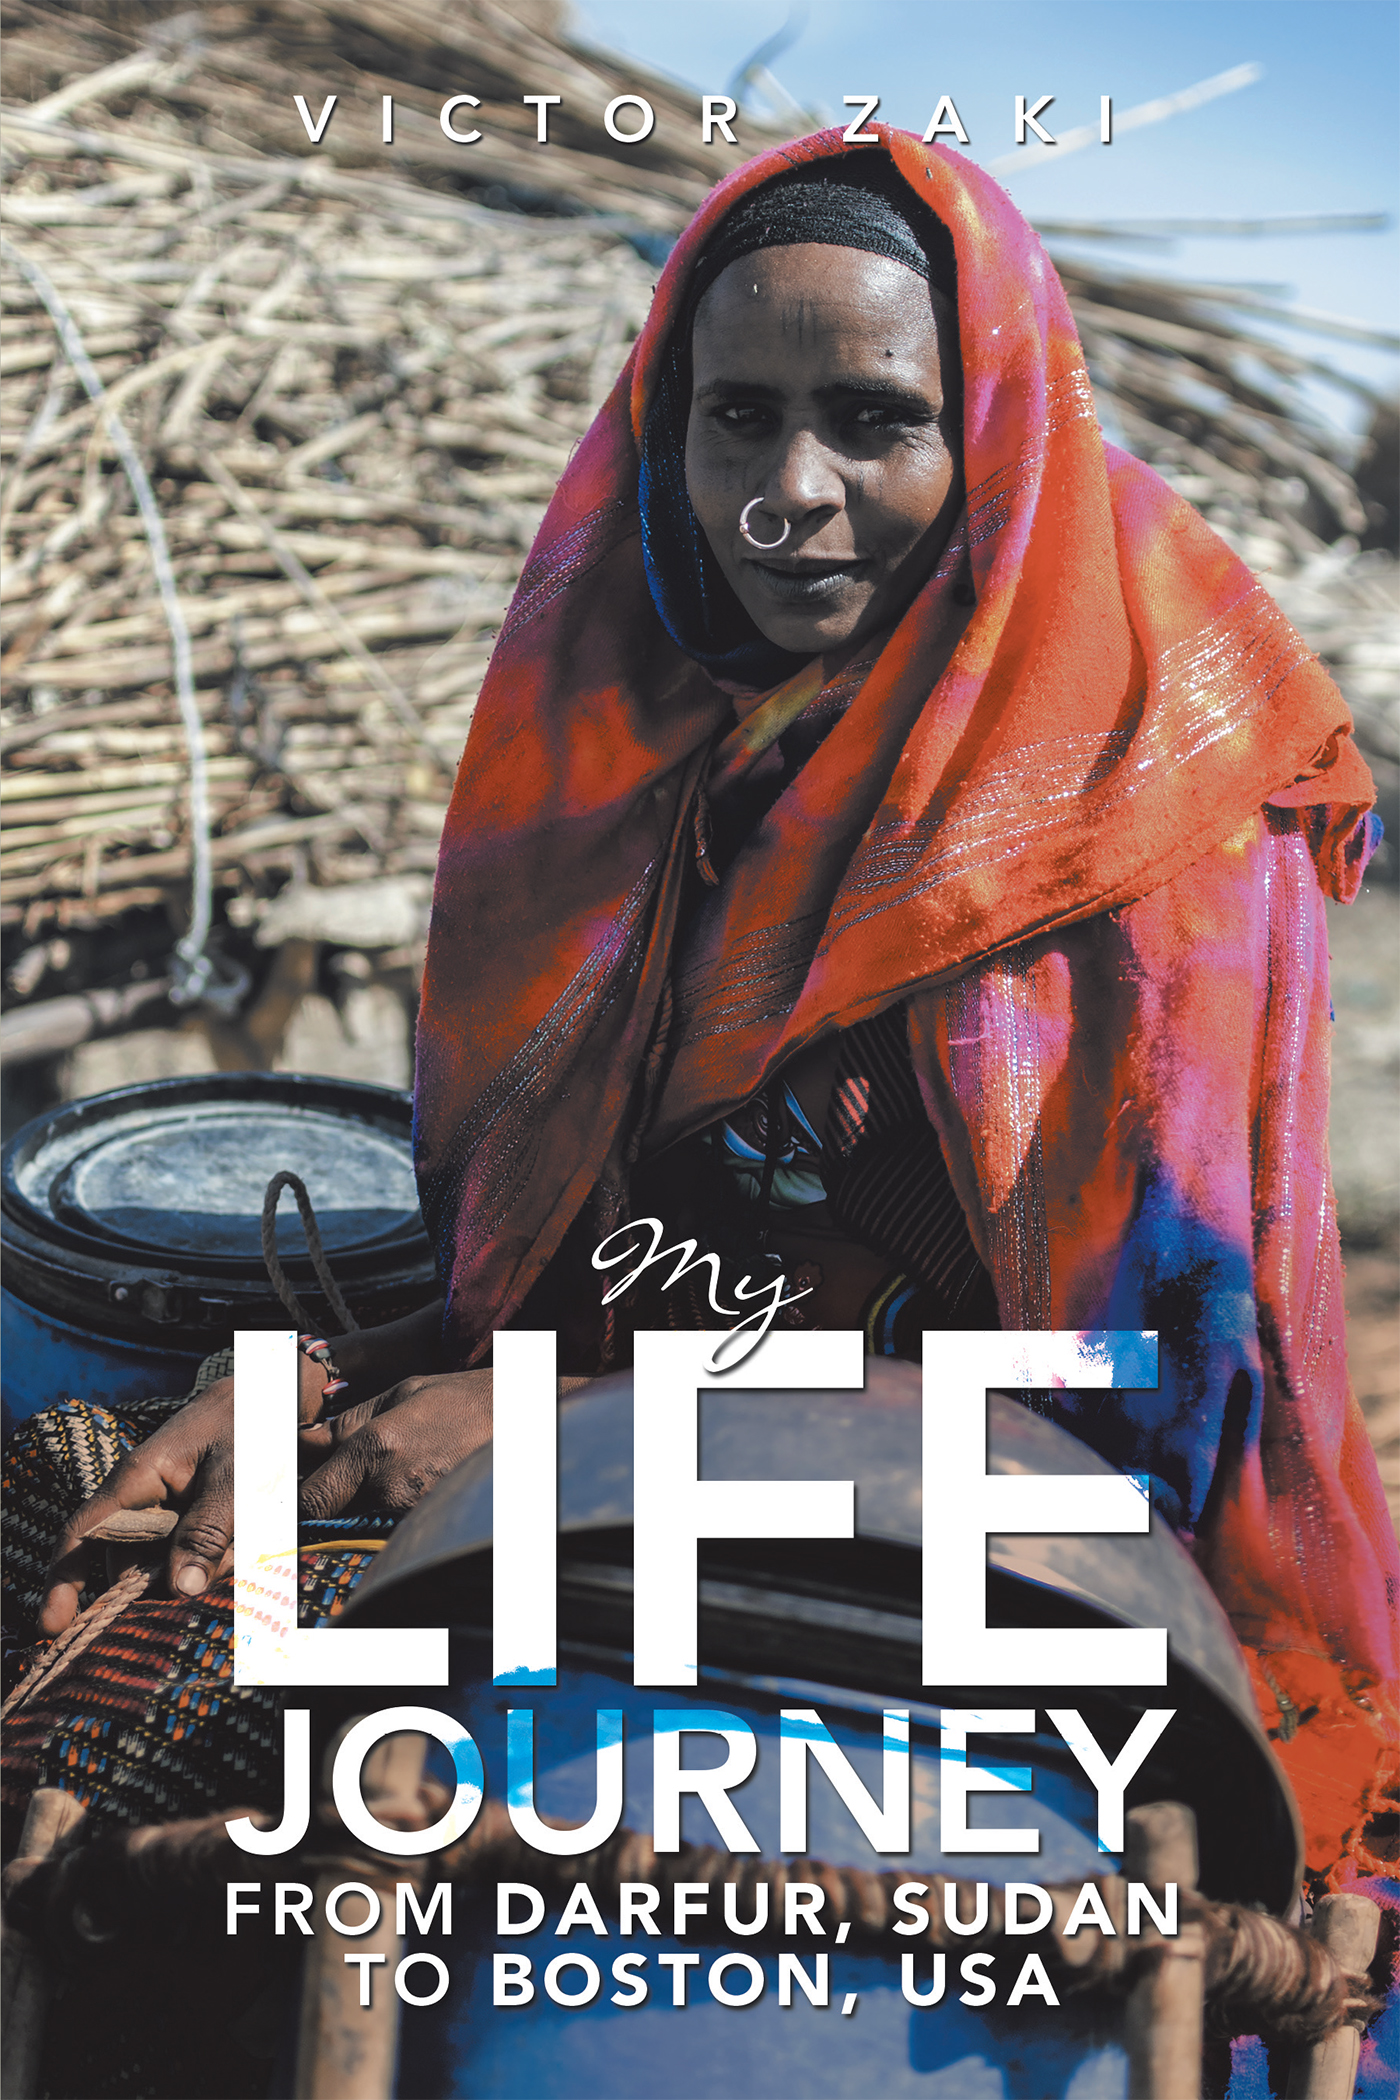 “My Life Journey from Darfur, Sudan to Boston, USA” by Victor Zaki